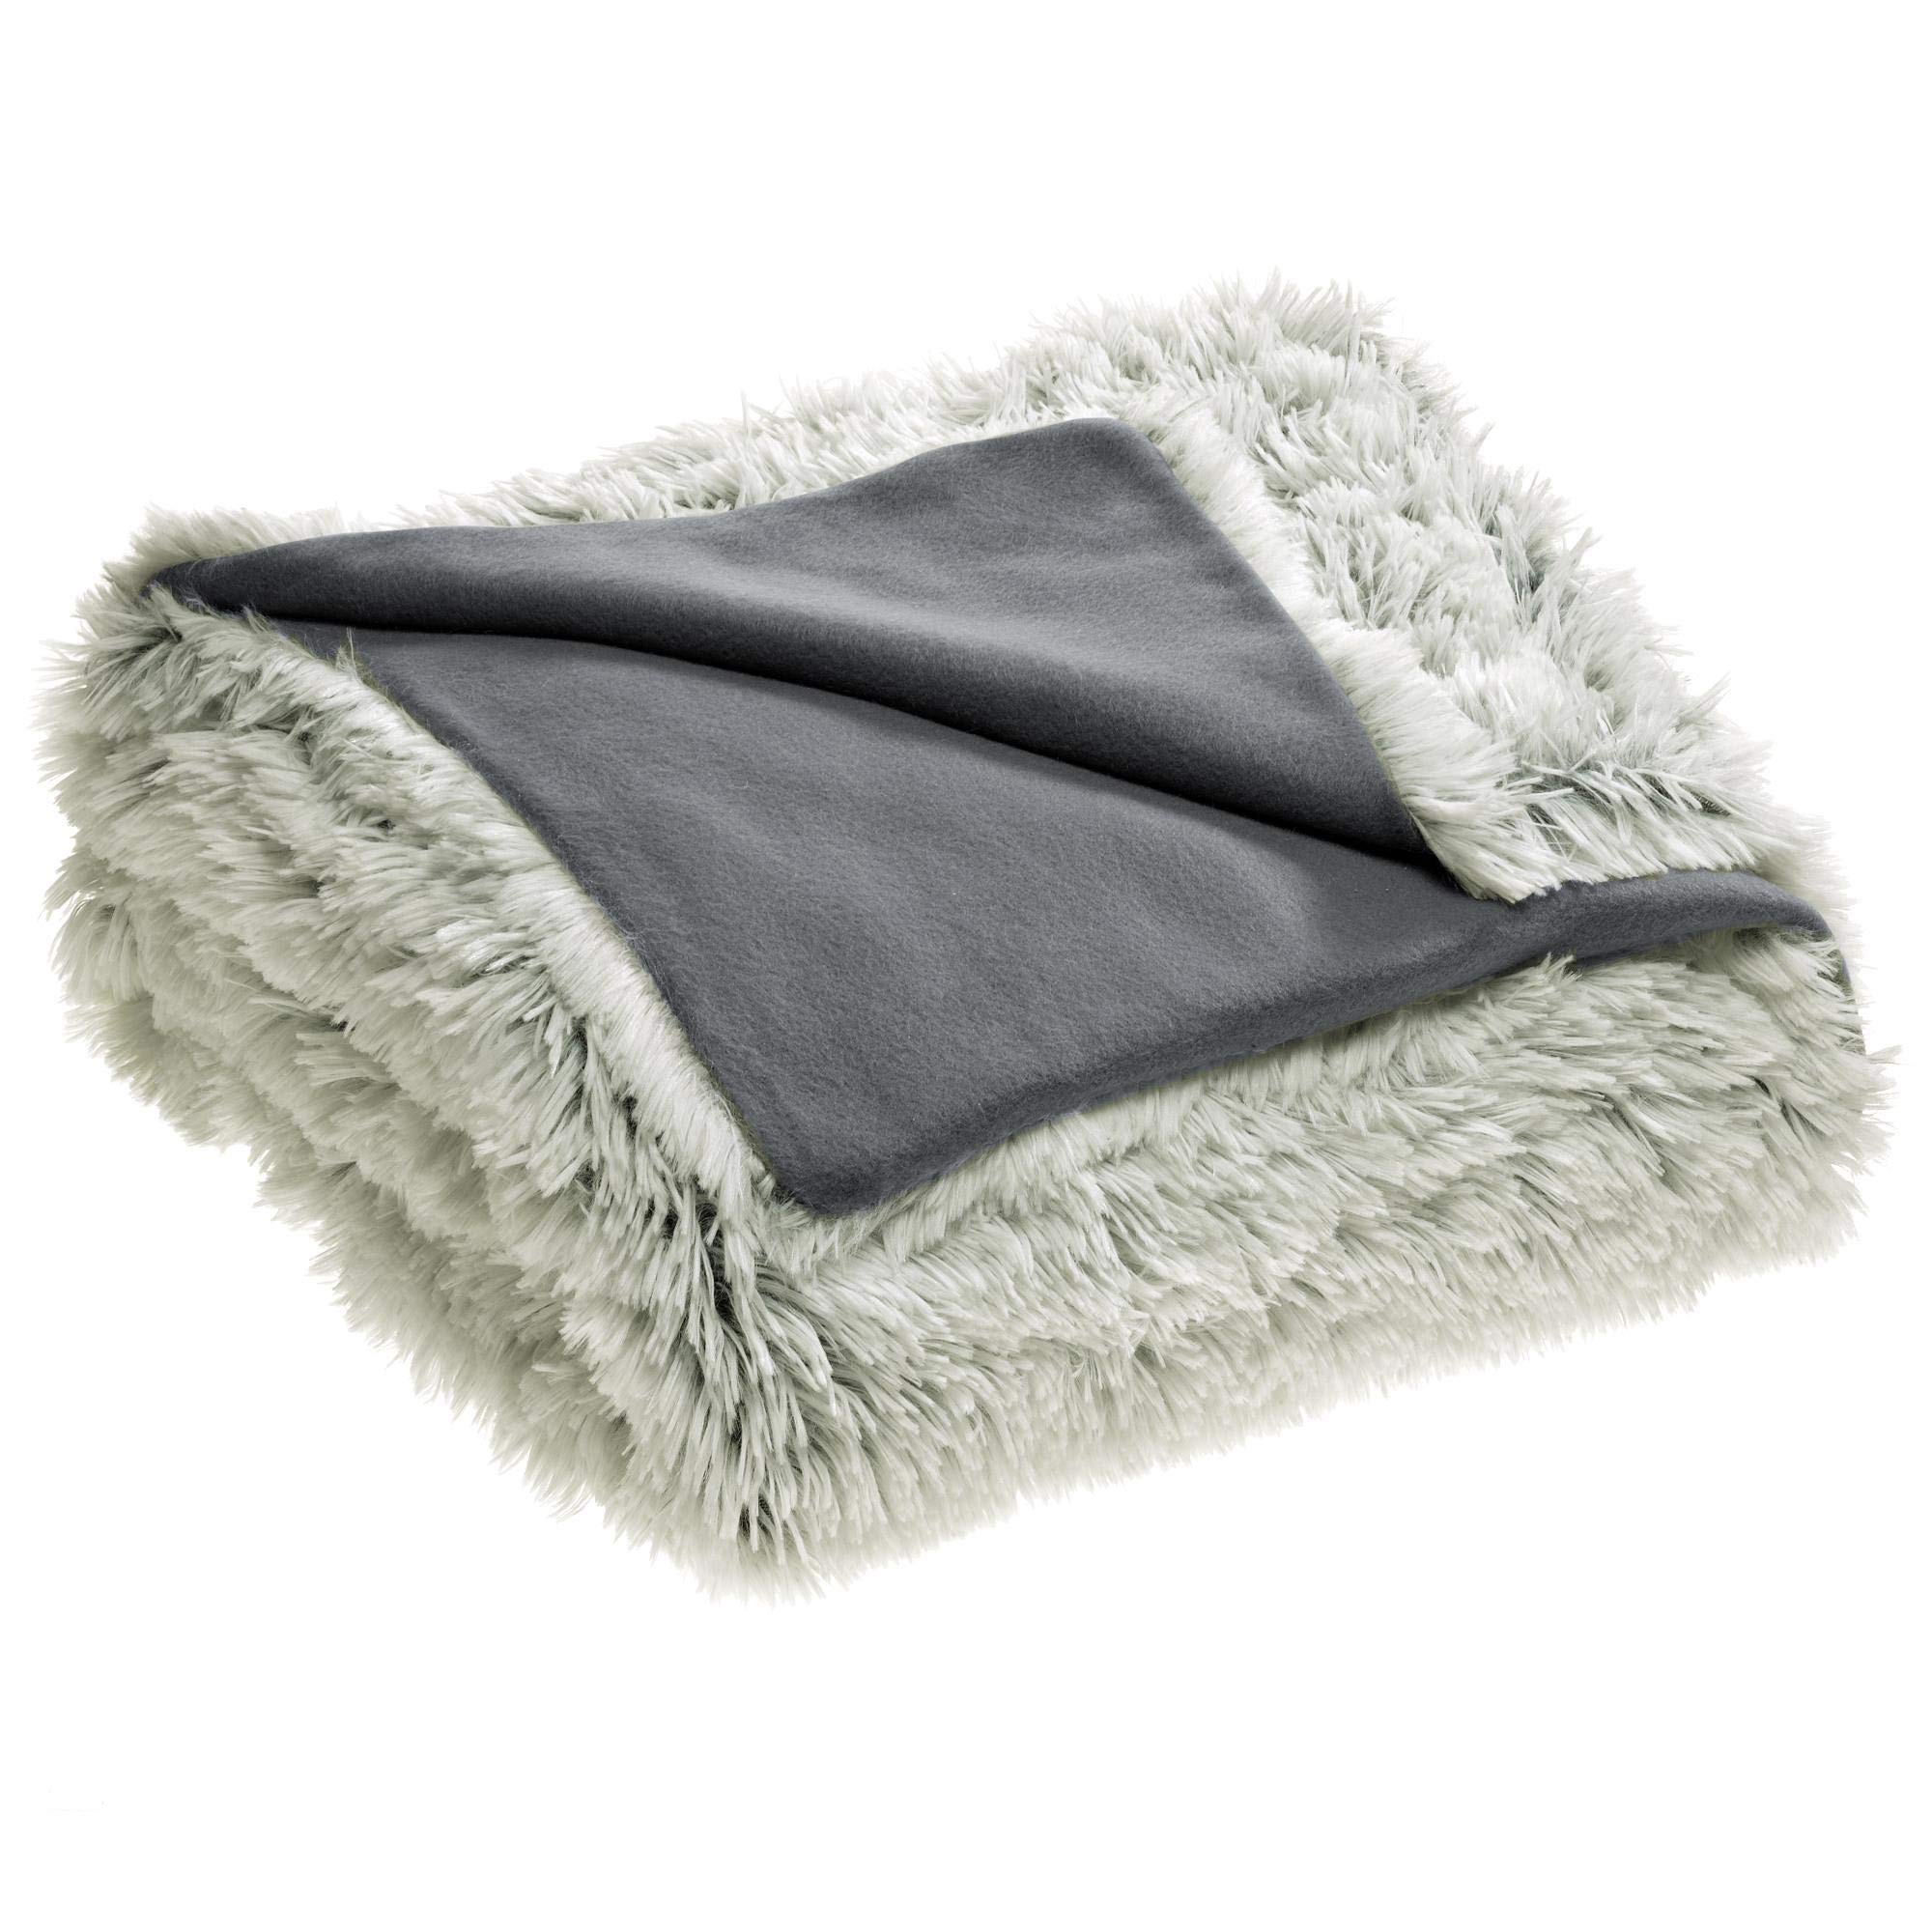 CelinaTex Shetland Bettwäsche 155 x 220 cm 4-teilig Creme grau Polar-Fleece Bettbezug Flokati Optik Bett Garnitur